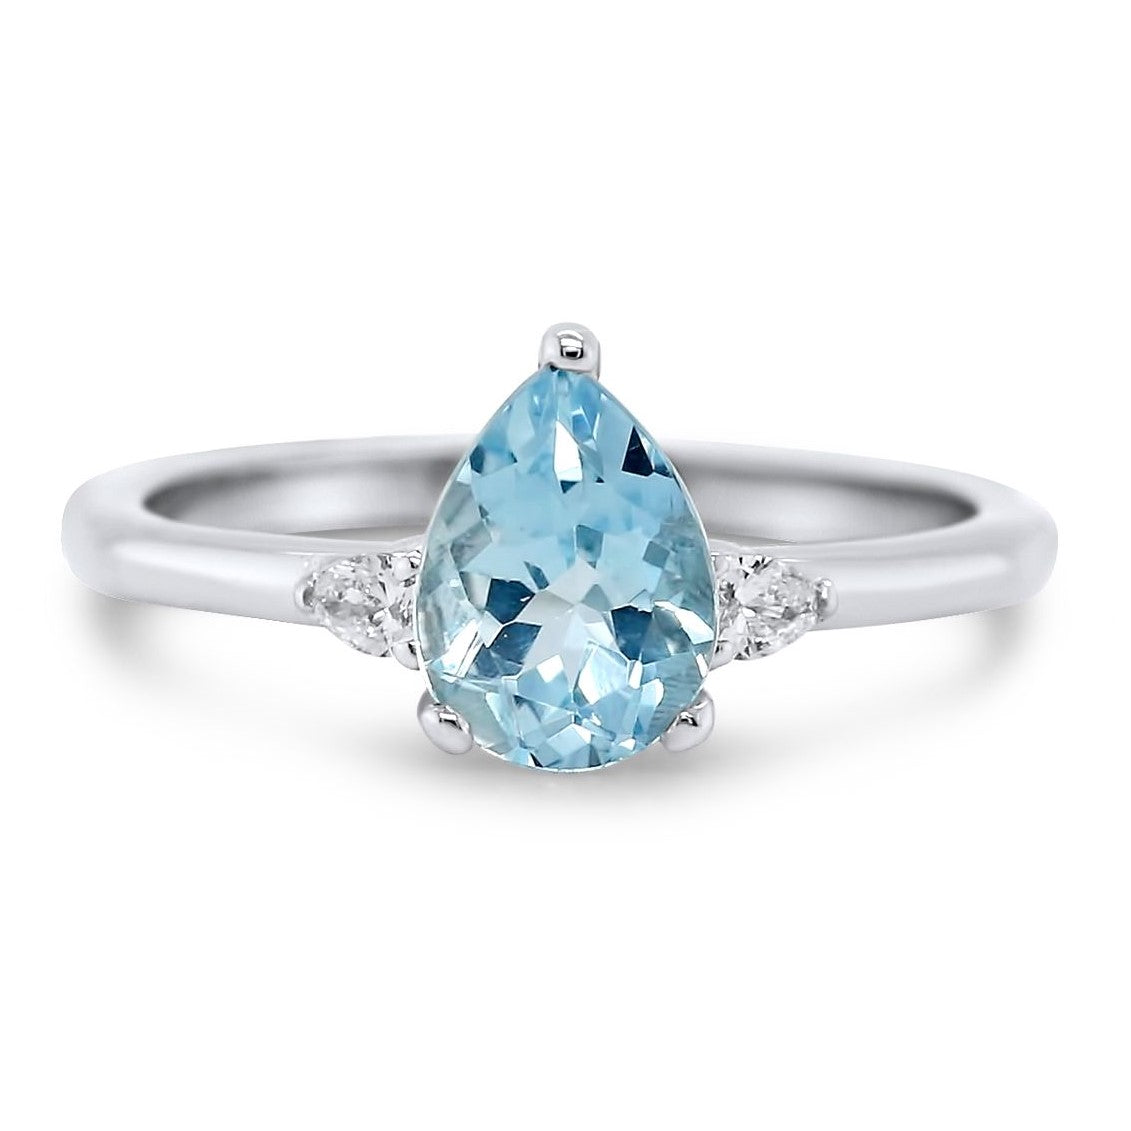 14k white gold three stone pear shaped aquamarine gemstone ring with a pear shaped diamond on each side